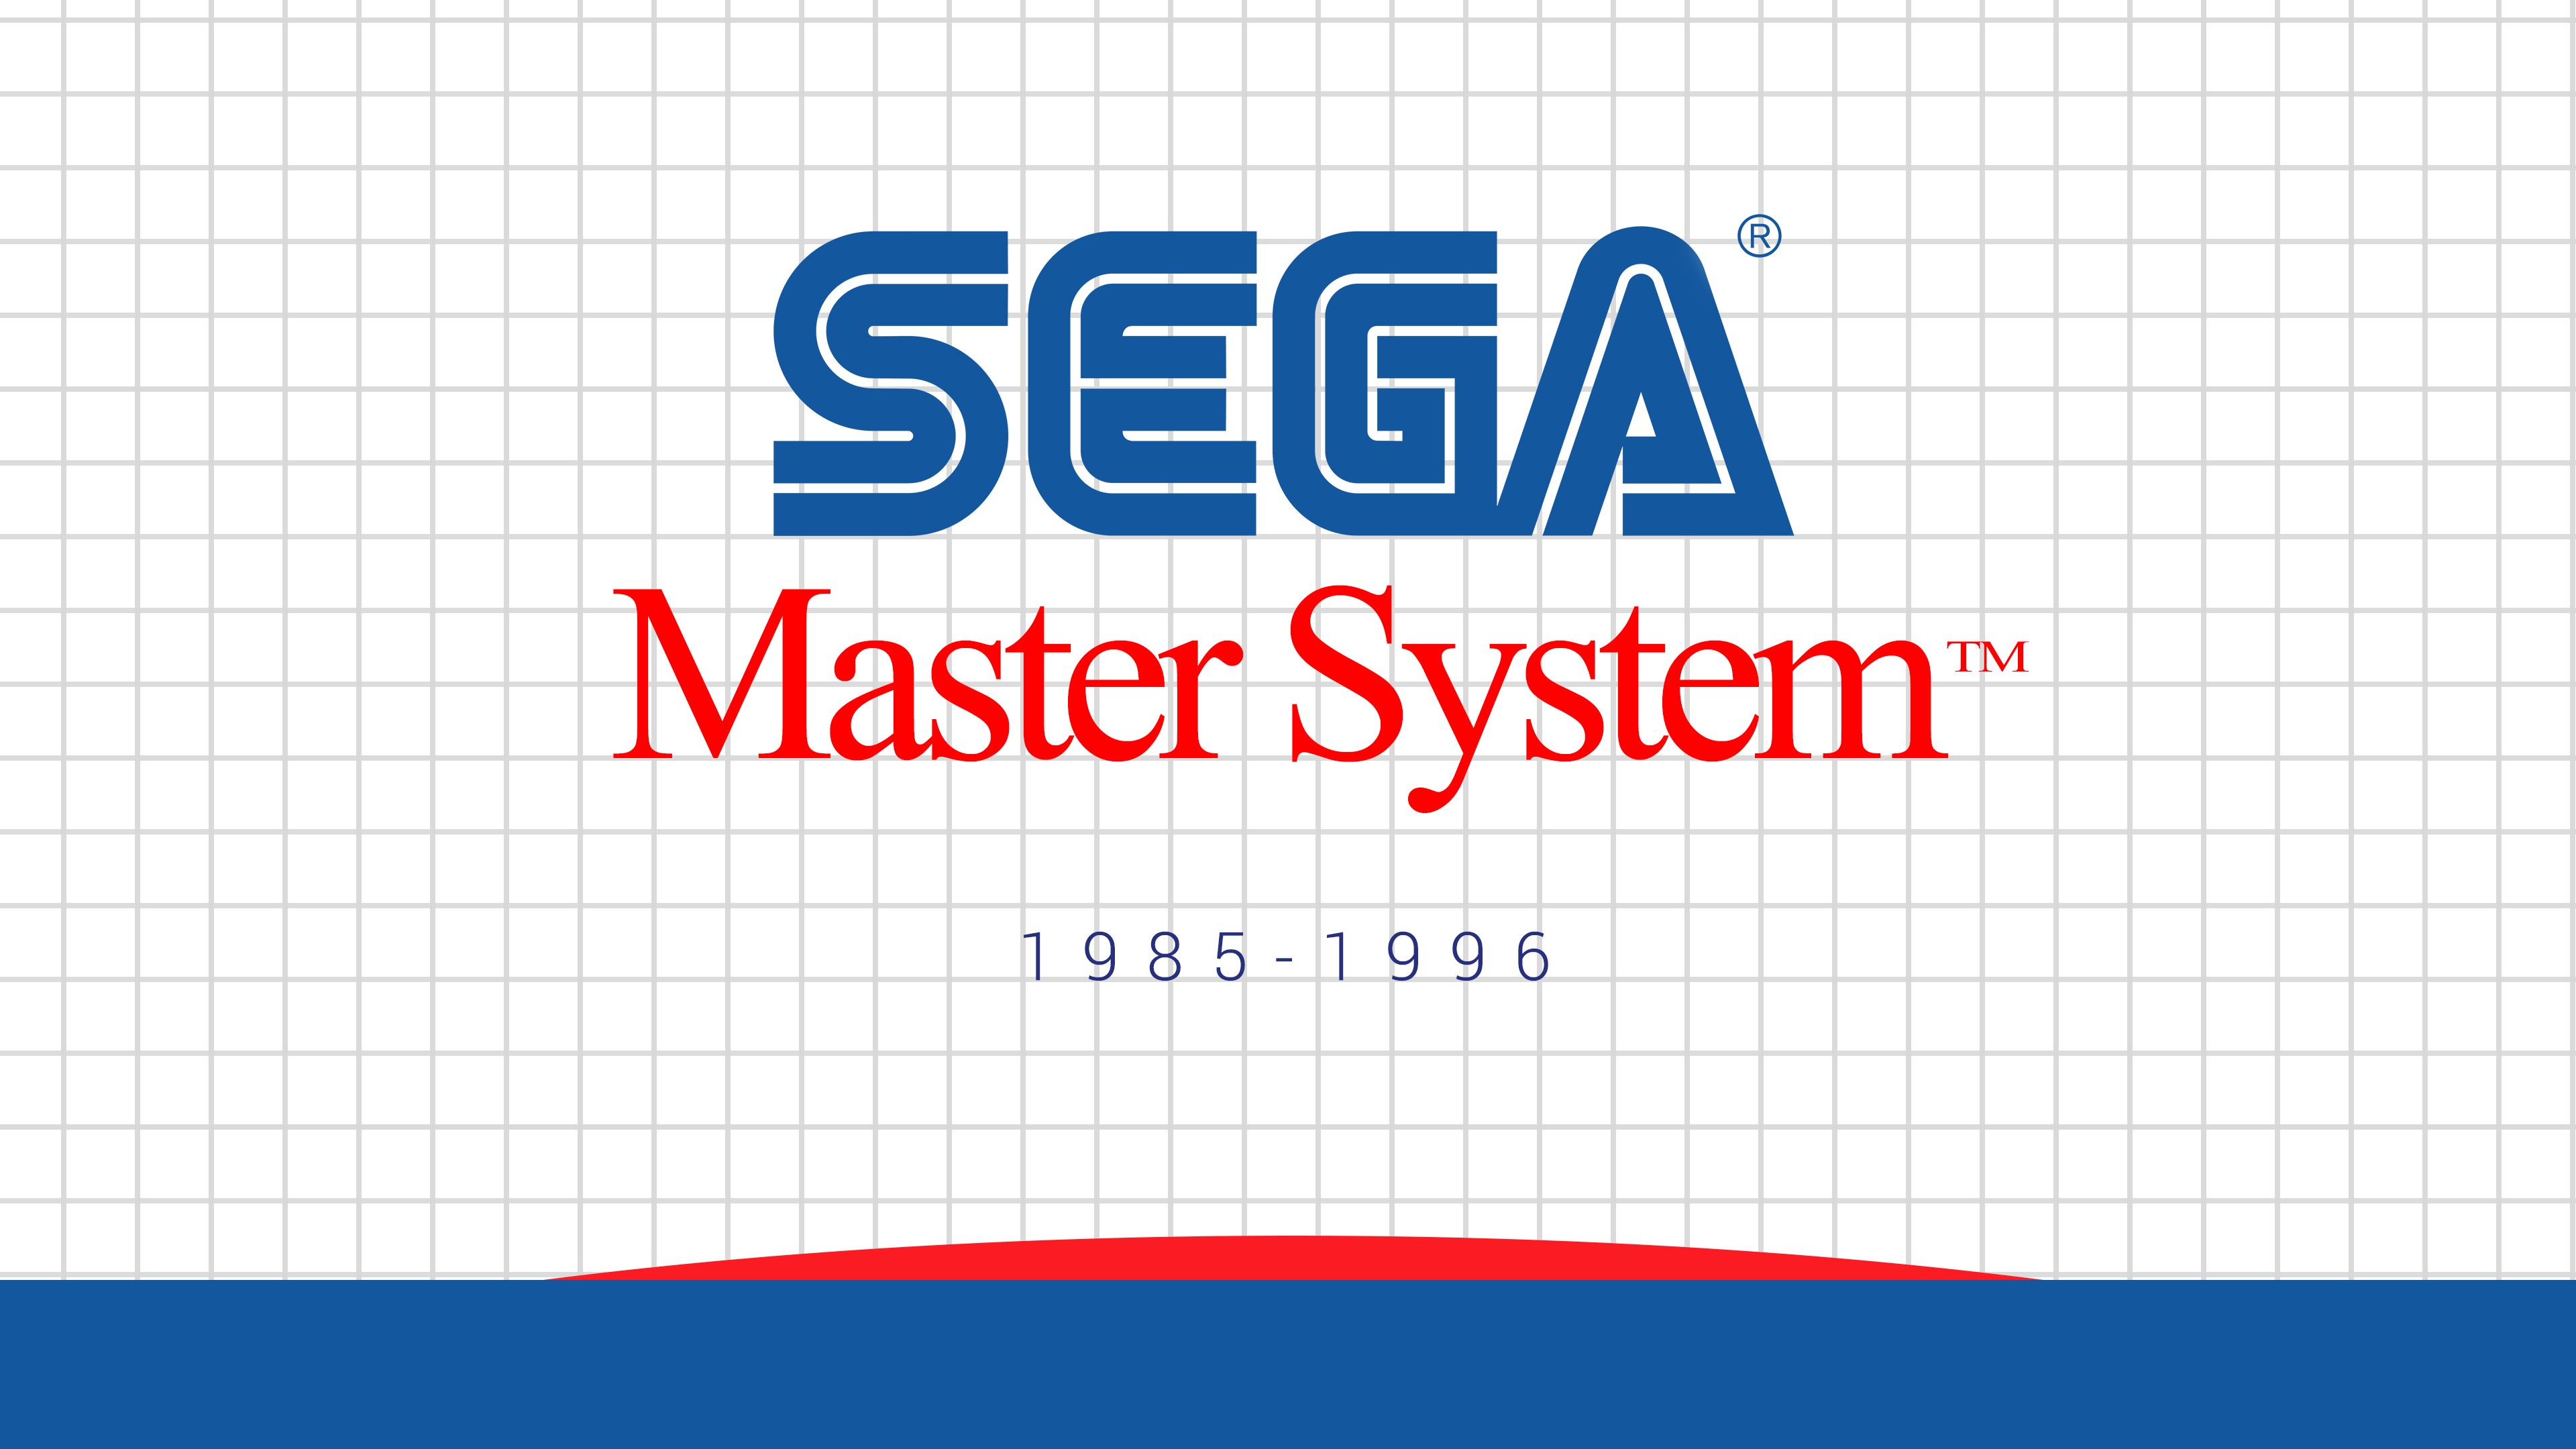 Sega 4k Ultra HD Wallpaper Background Image